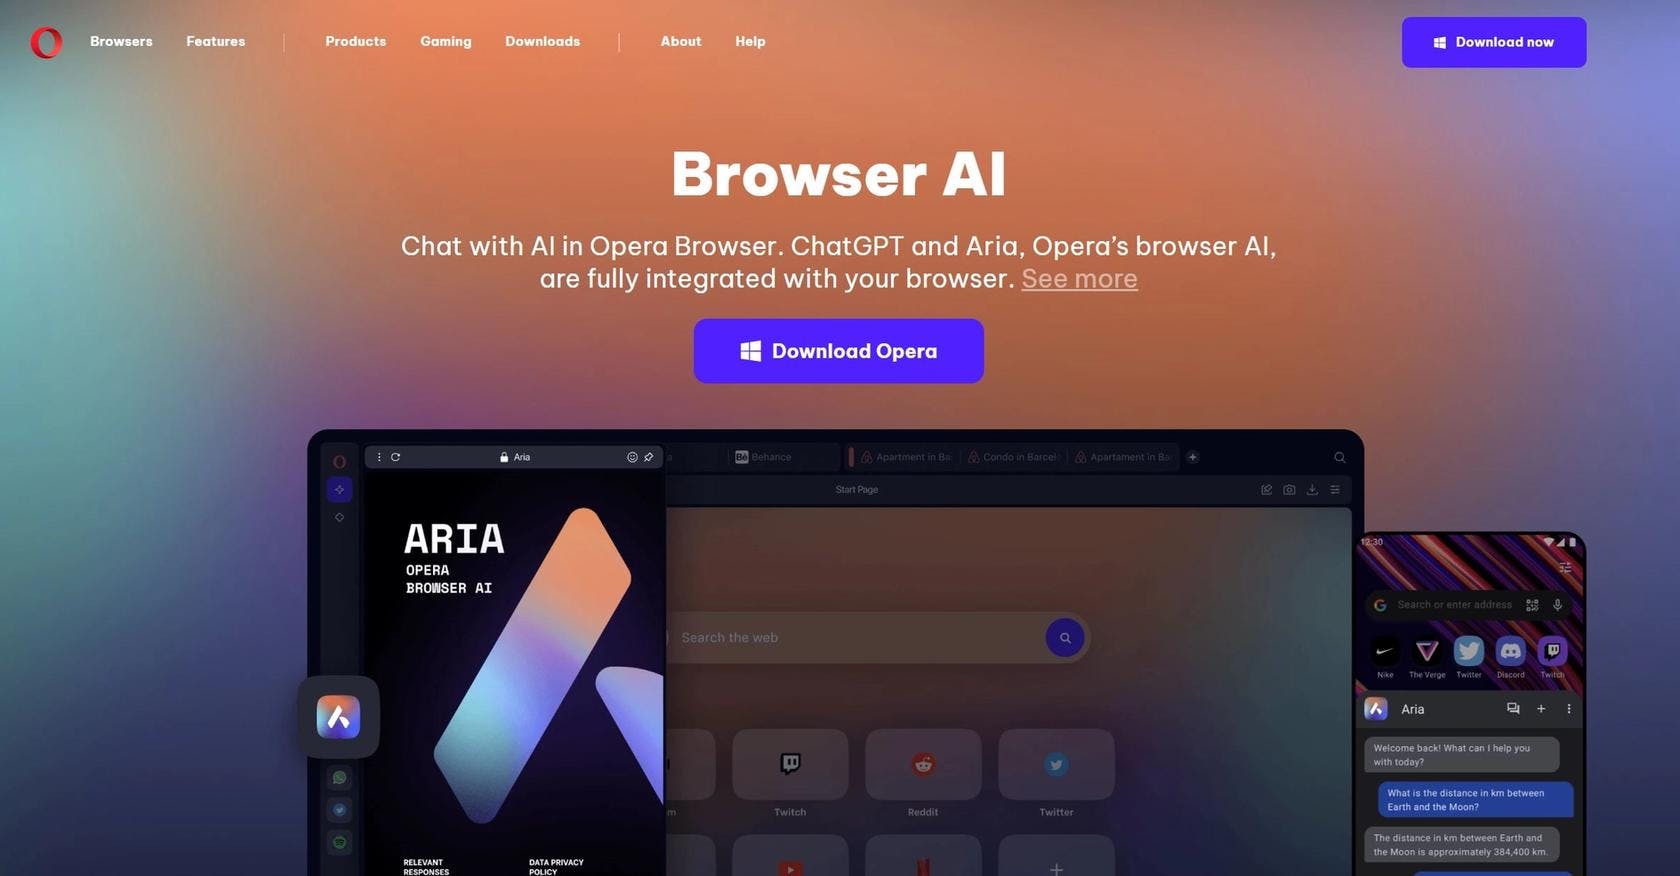 Browser AI